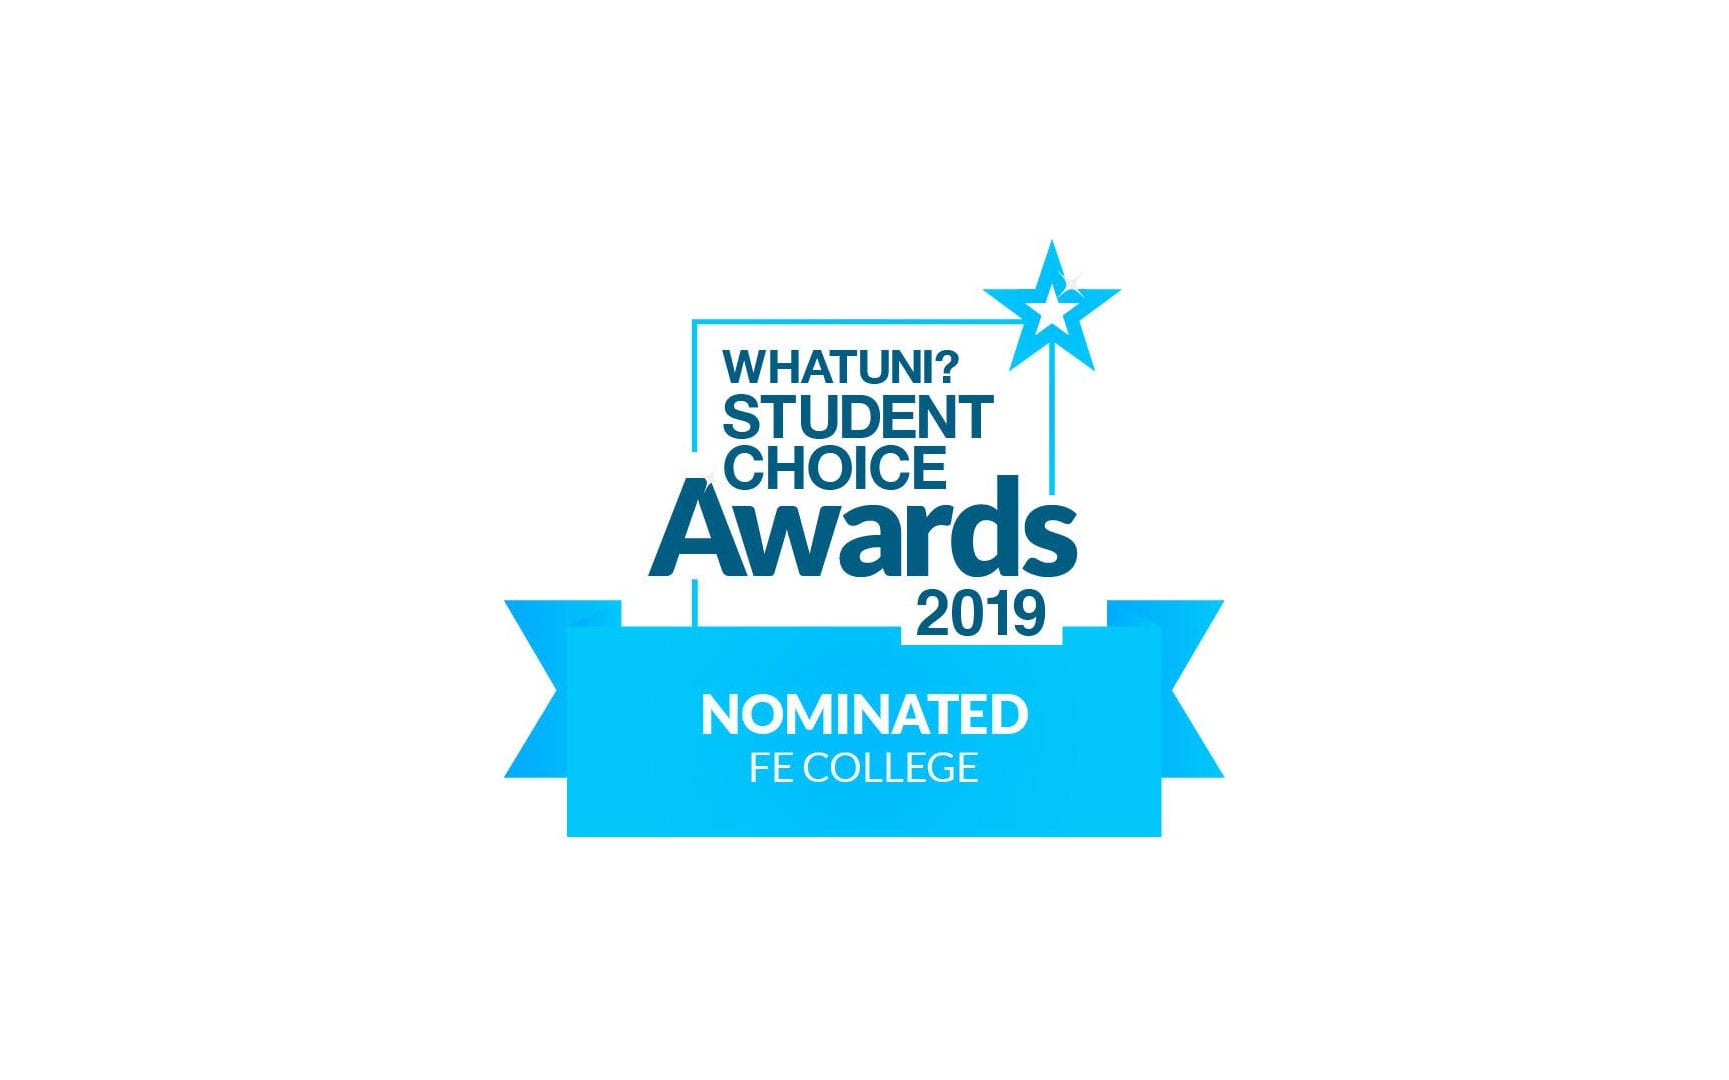 WhatUni Student Choice Awards 2019